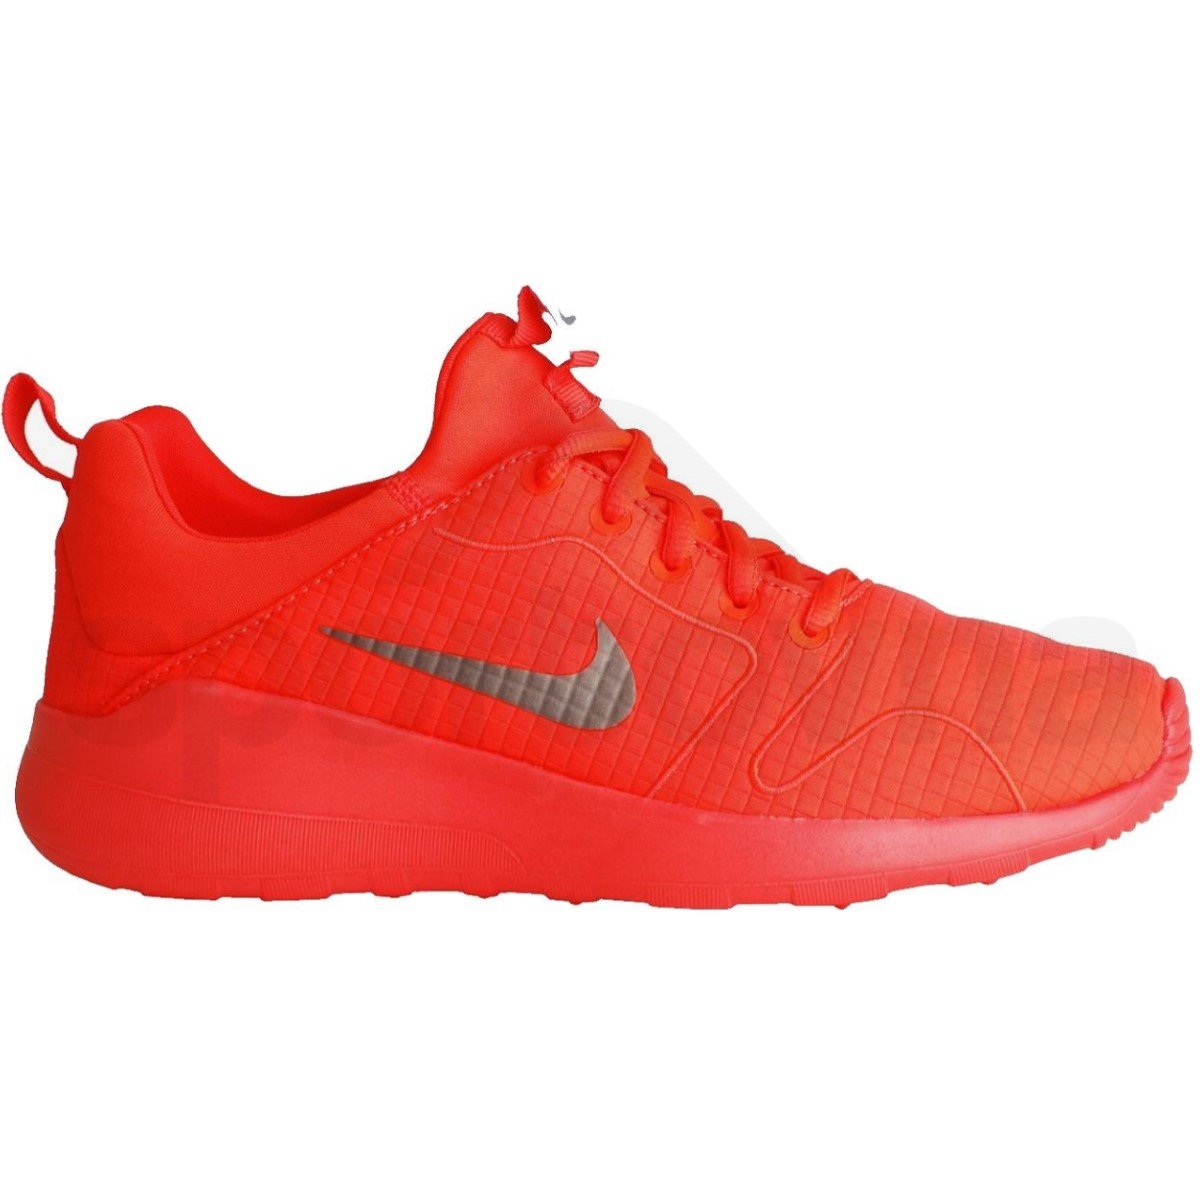 Obuv Nike Kaishi 2.0 Prem - oranžová